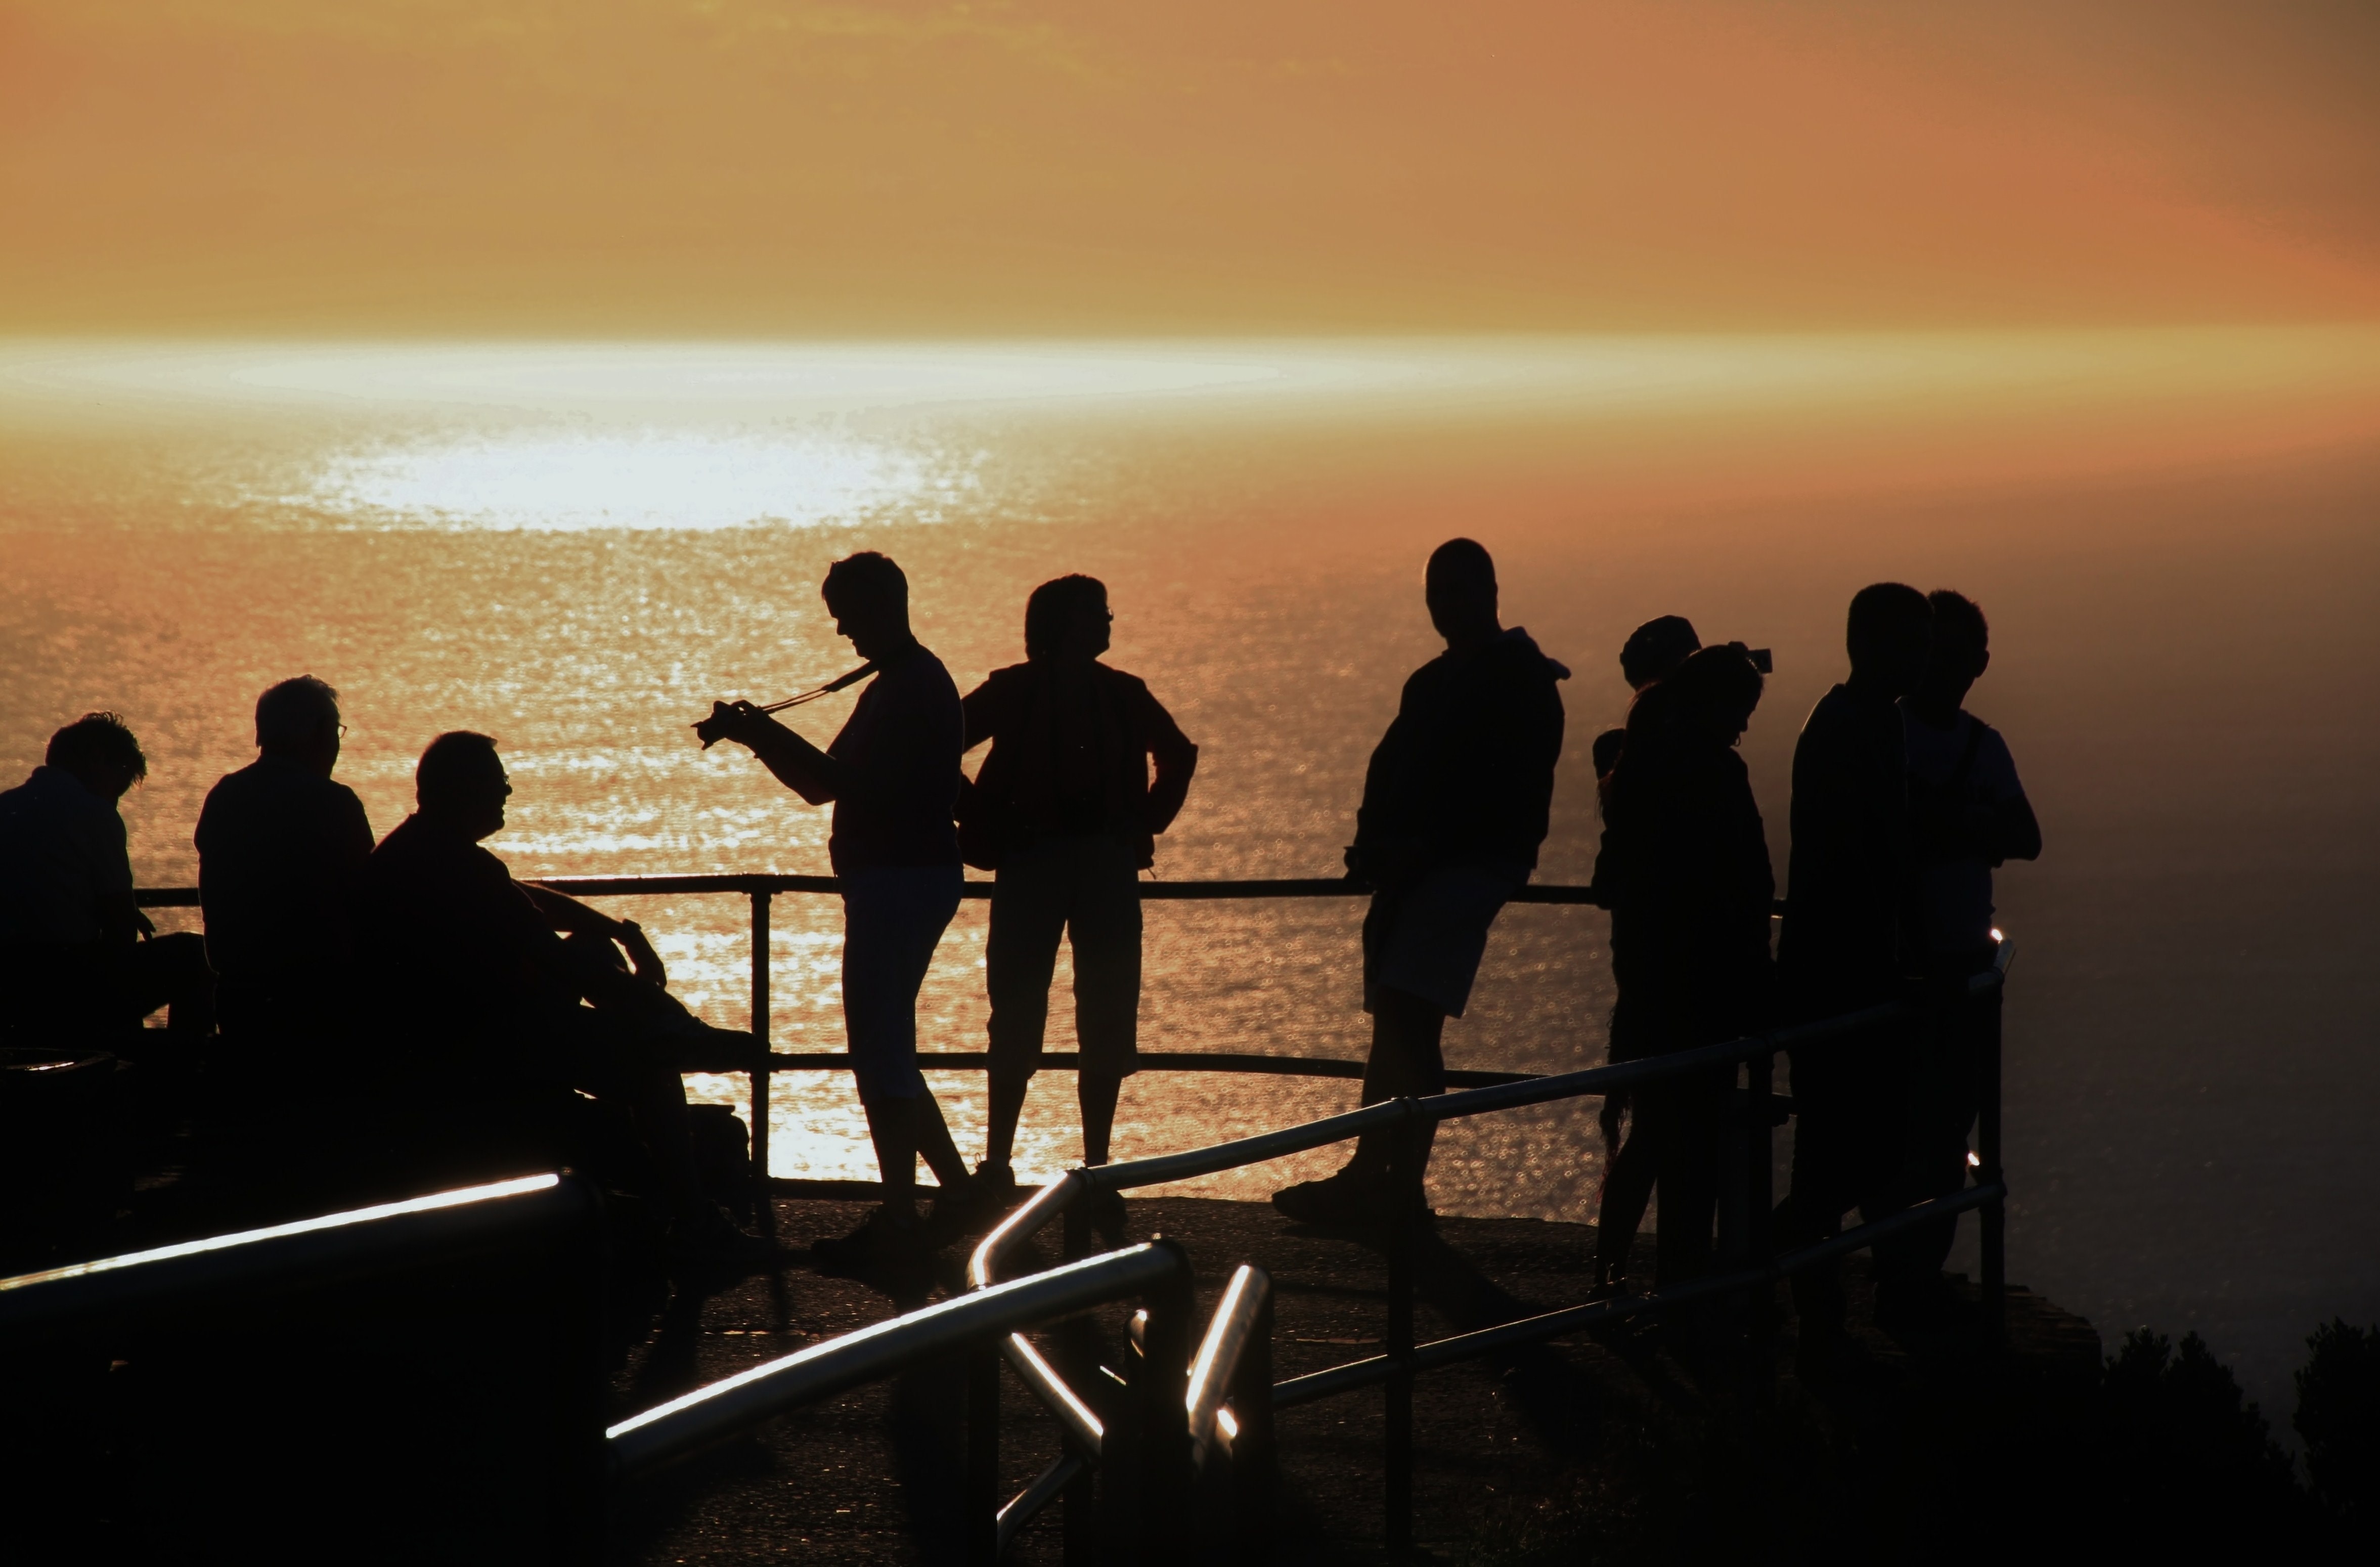 silhouette of 10 person in ship